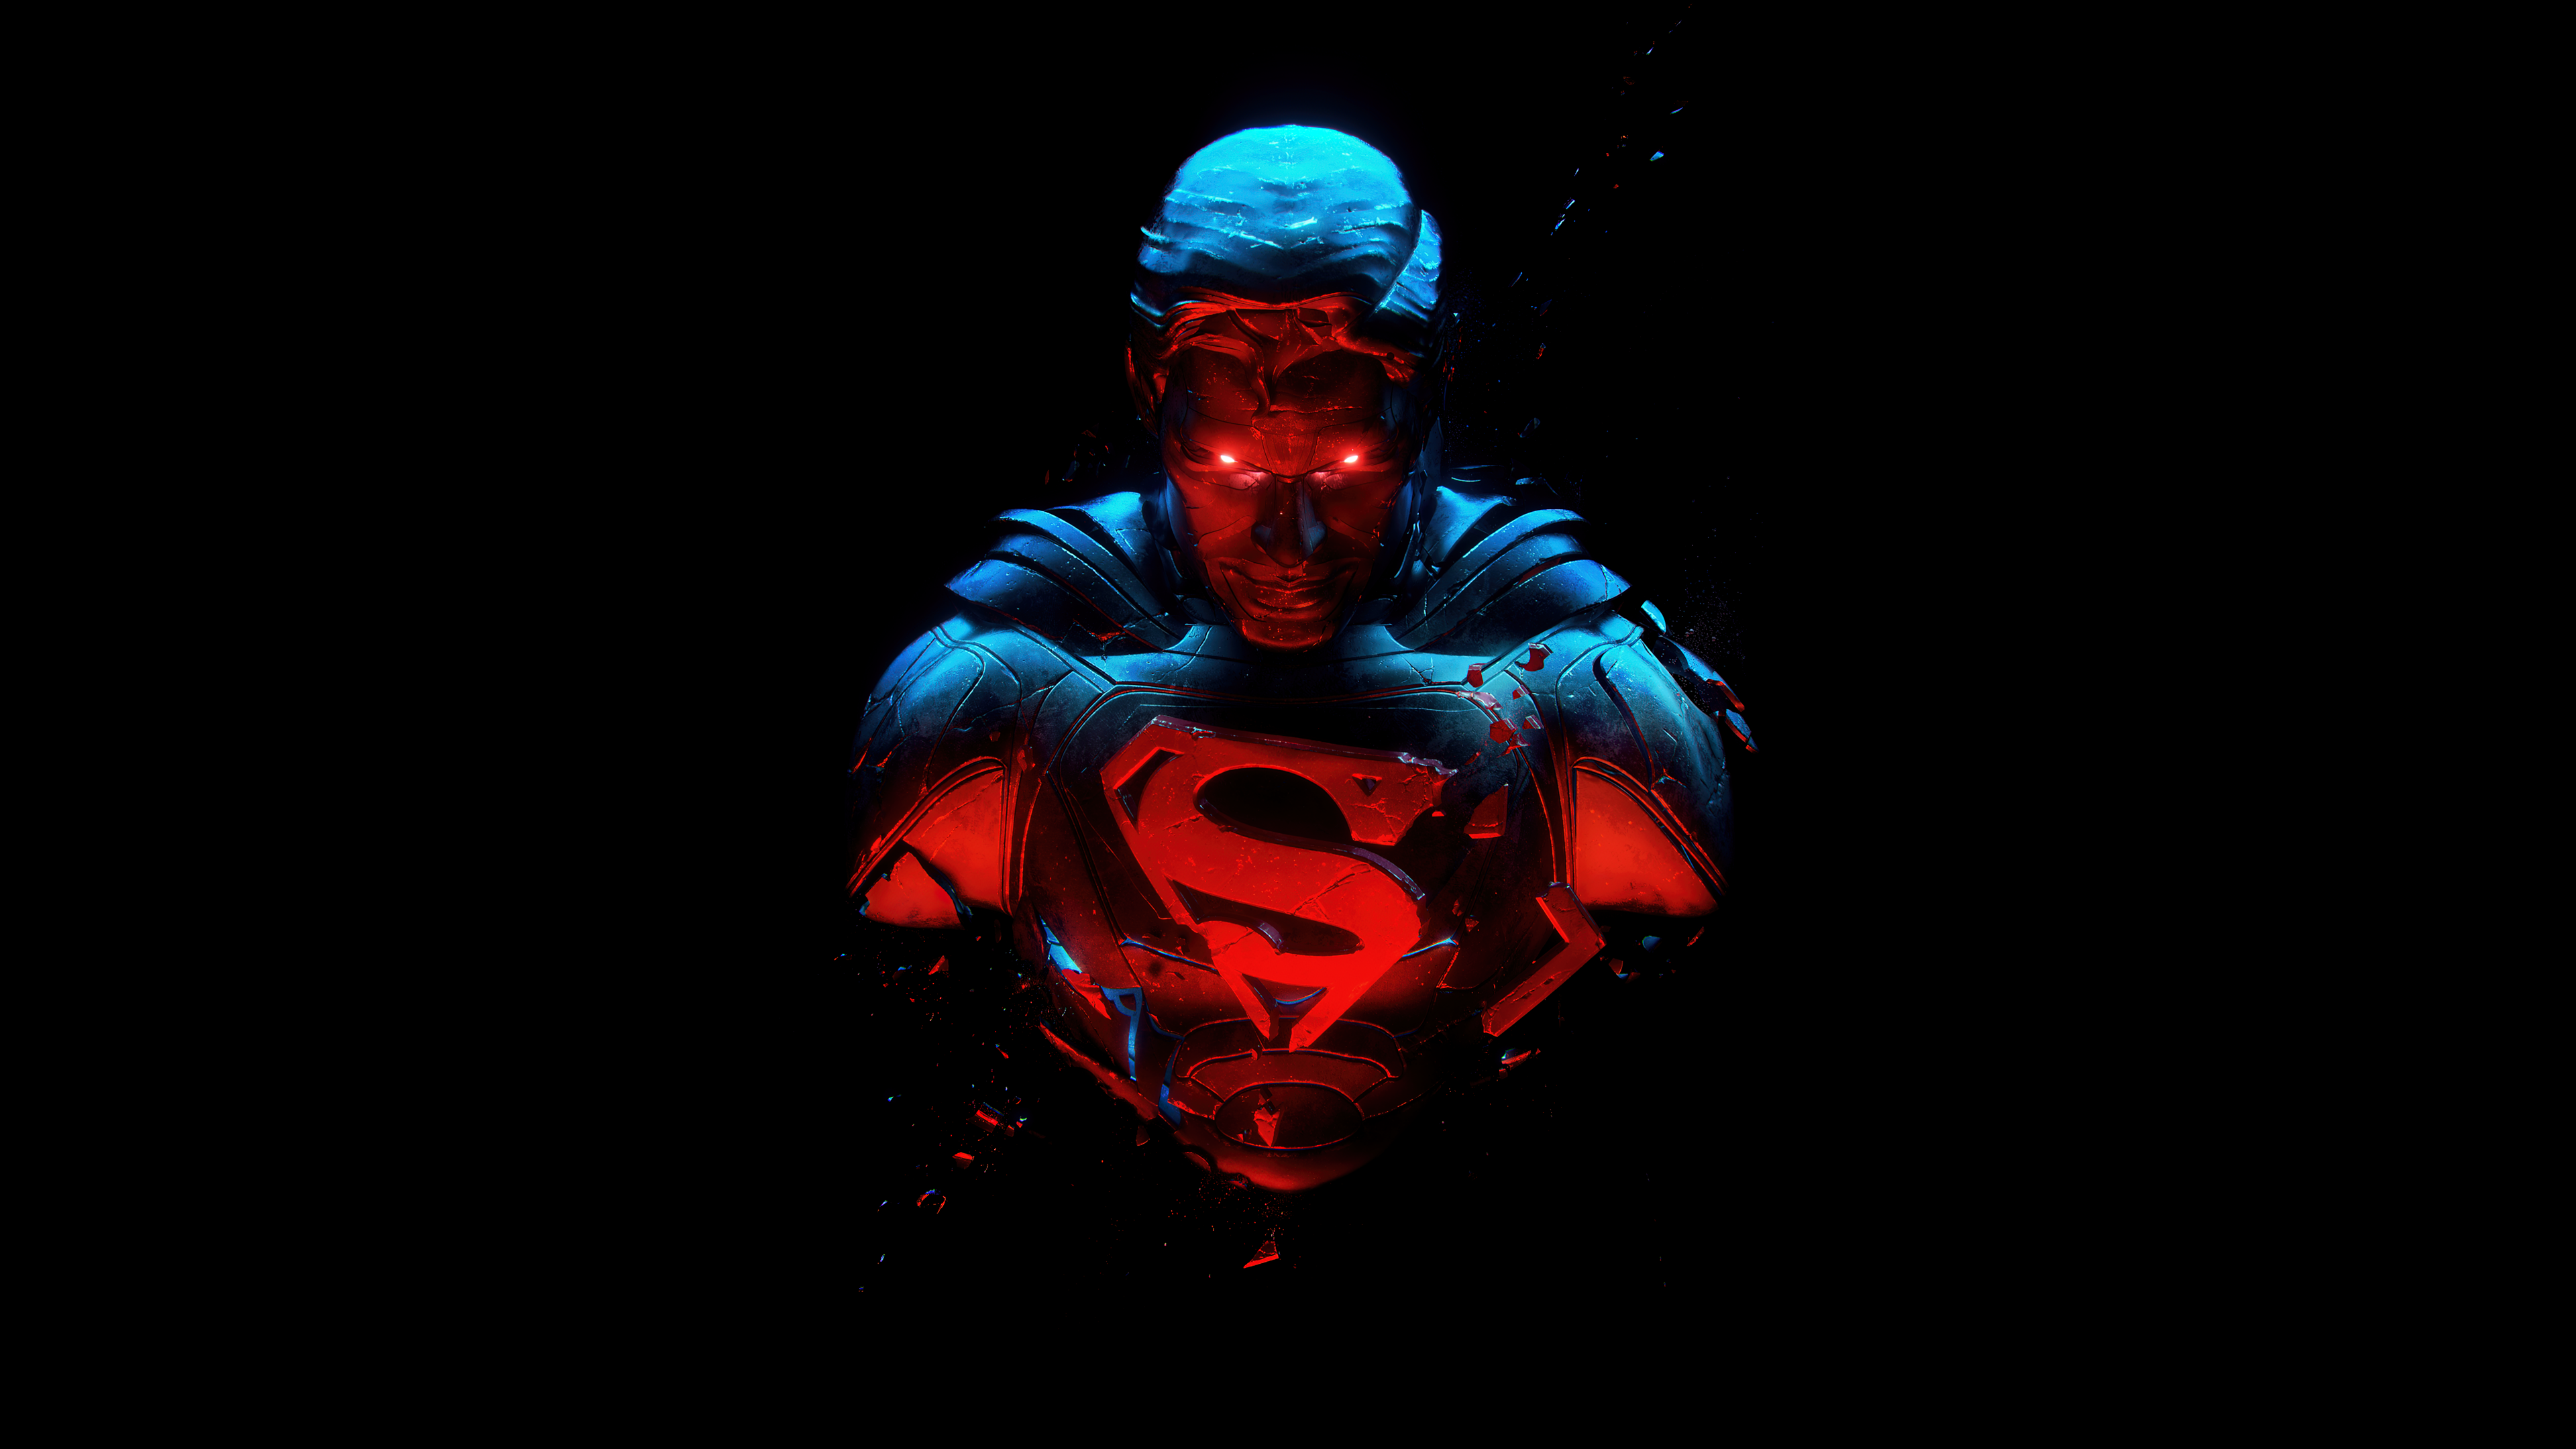 4K Darkseid Batman Vs Superman Wallpaper, HD Superheroes 4K Wallpapers,  Images and Background - Wallpapers Den